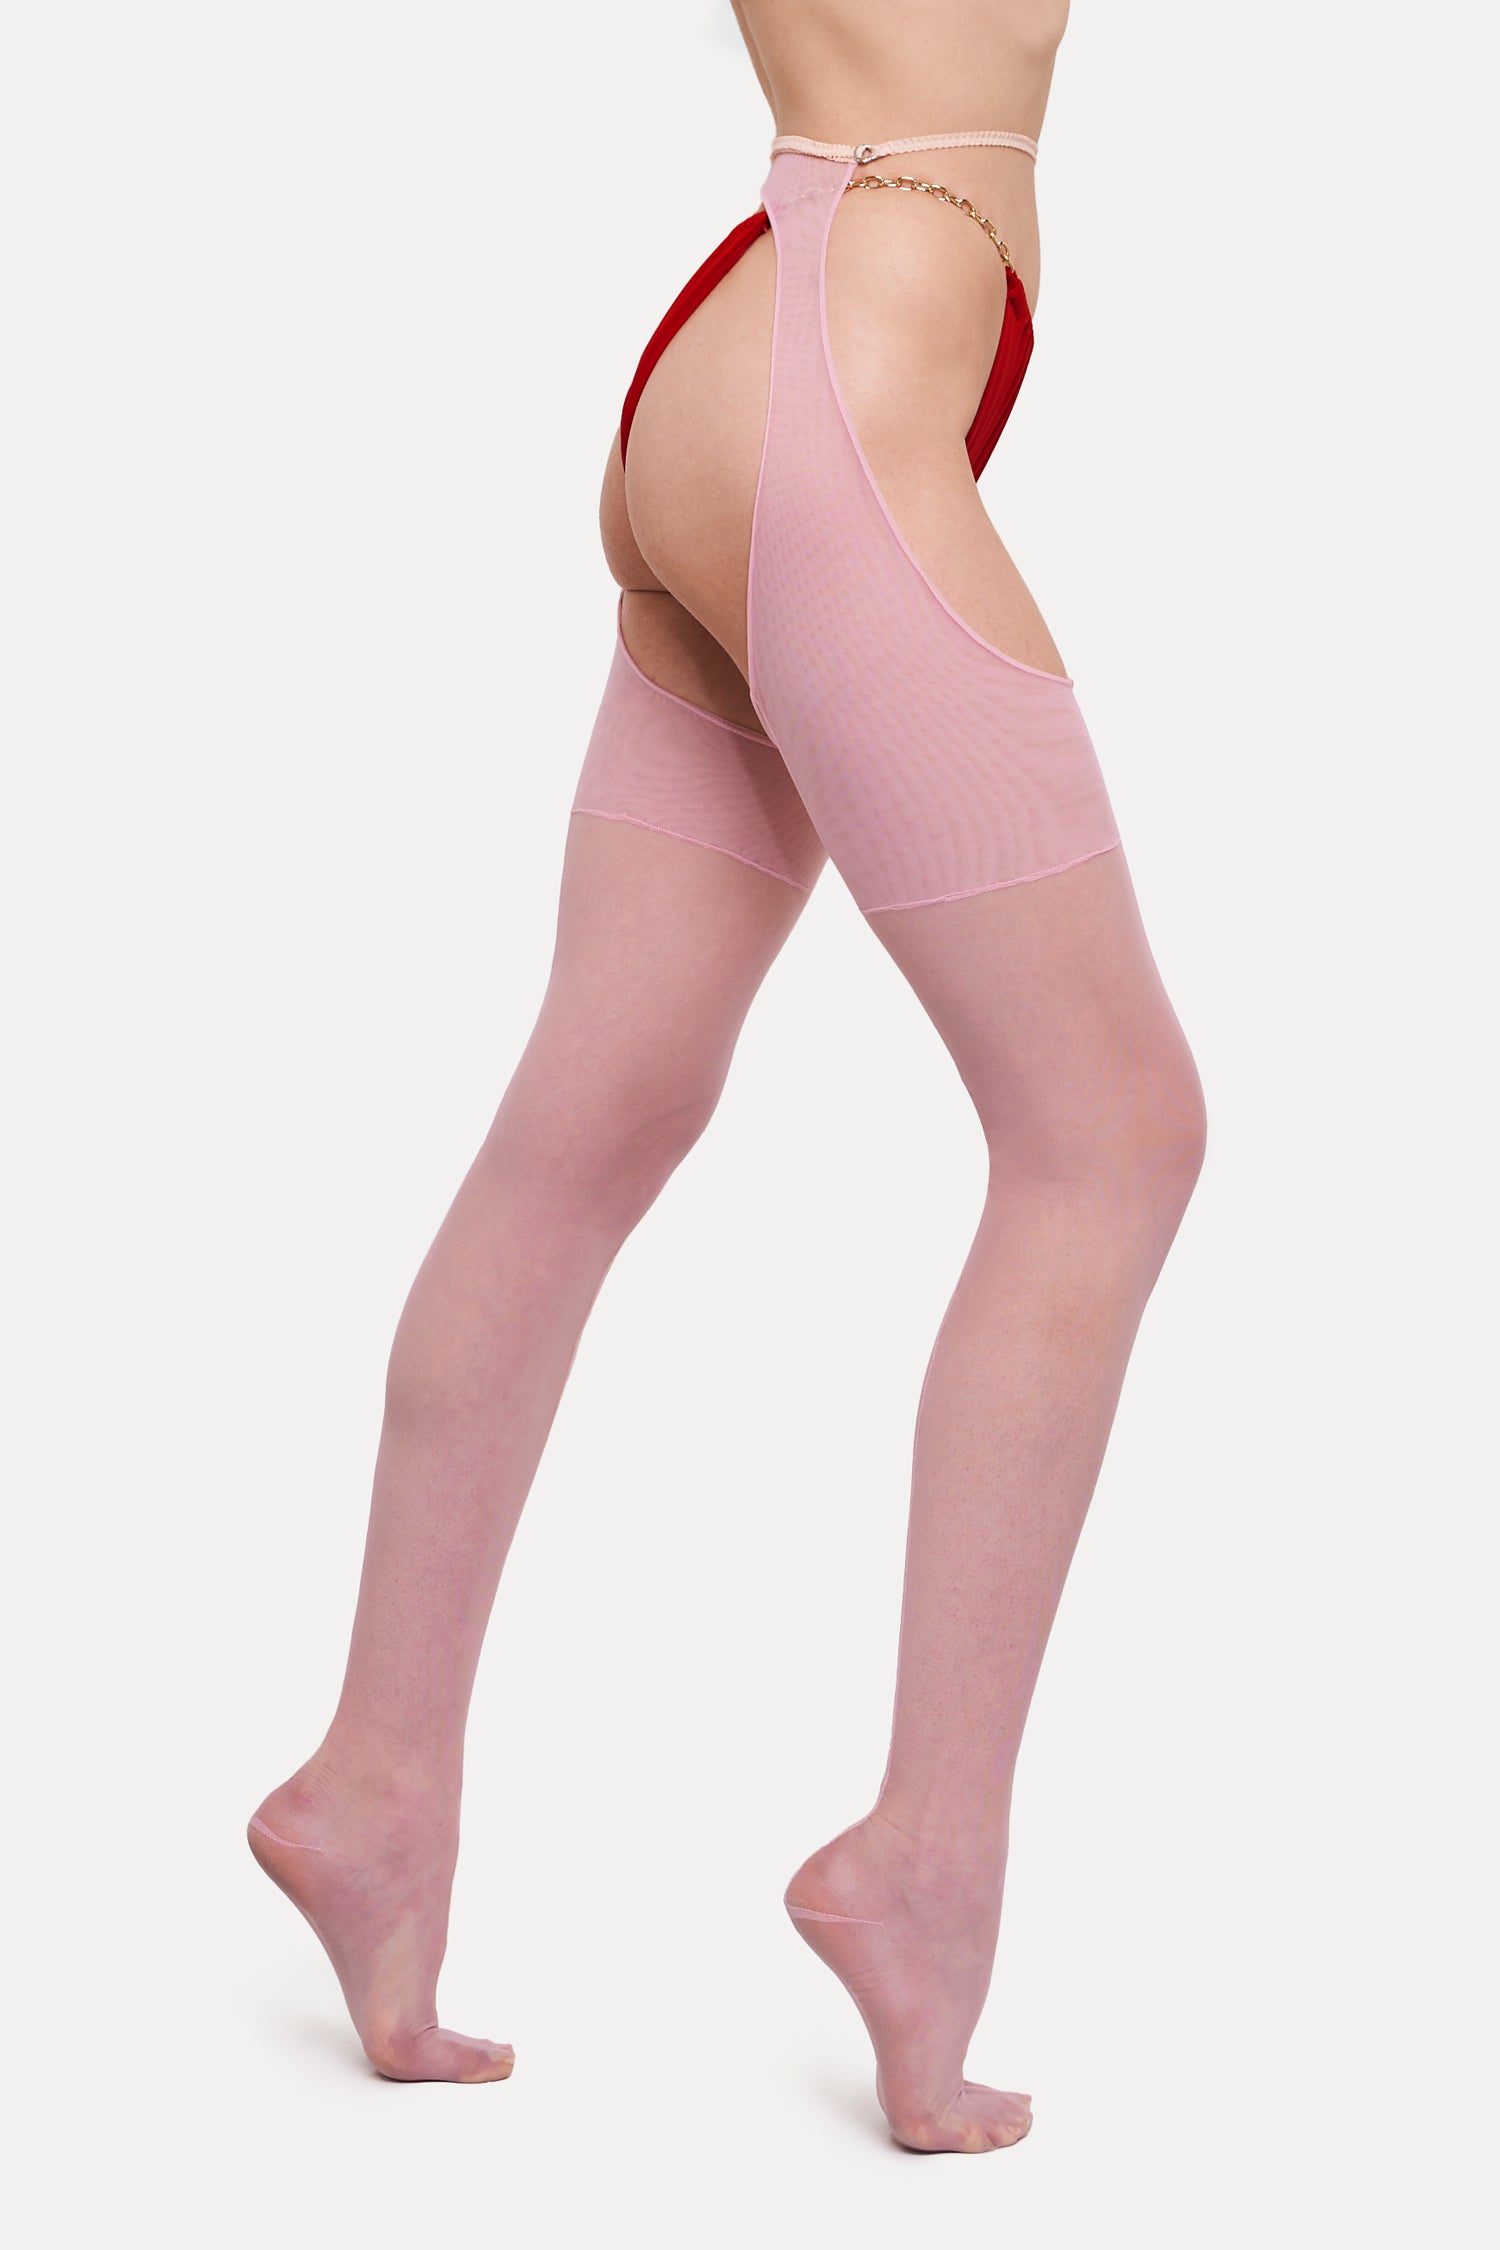 Lovelace Stockings - Pink